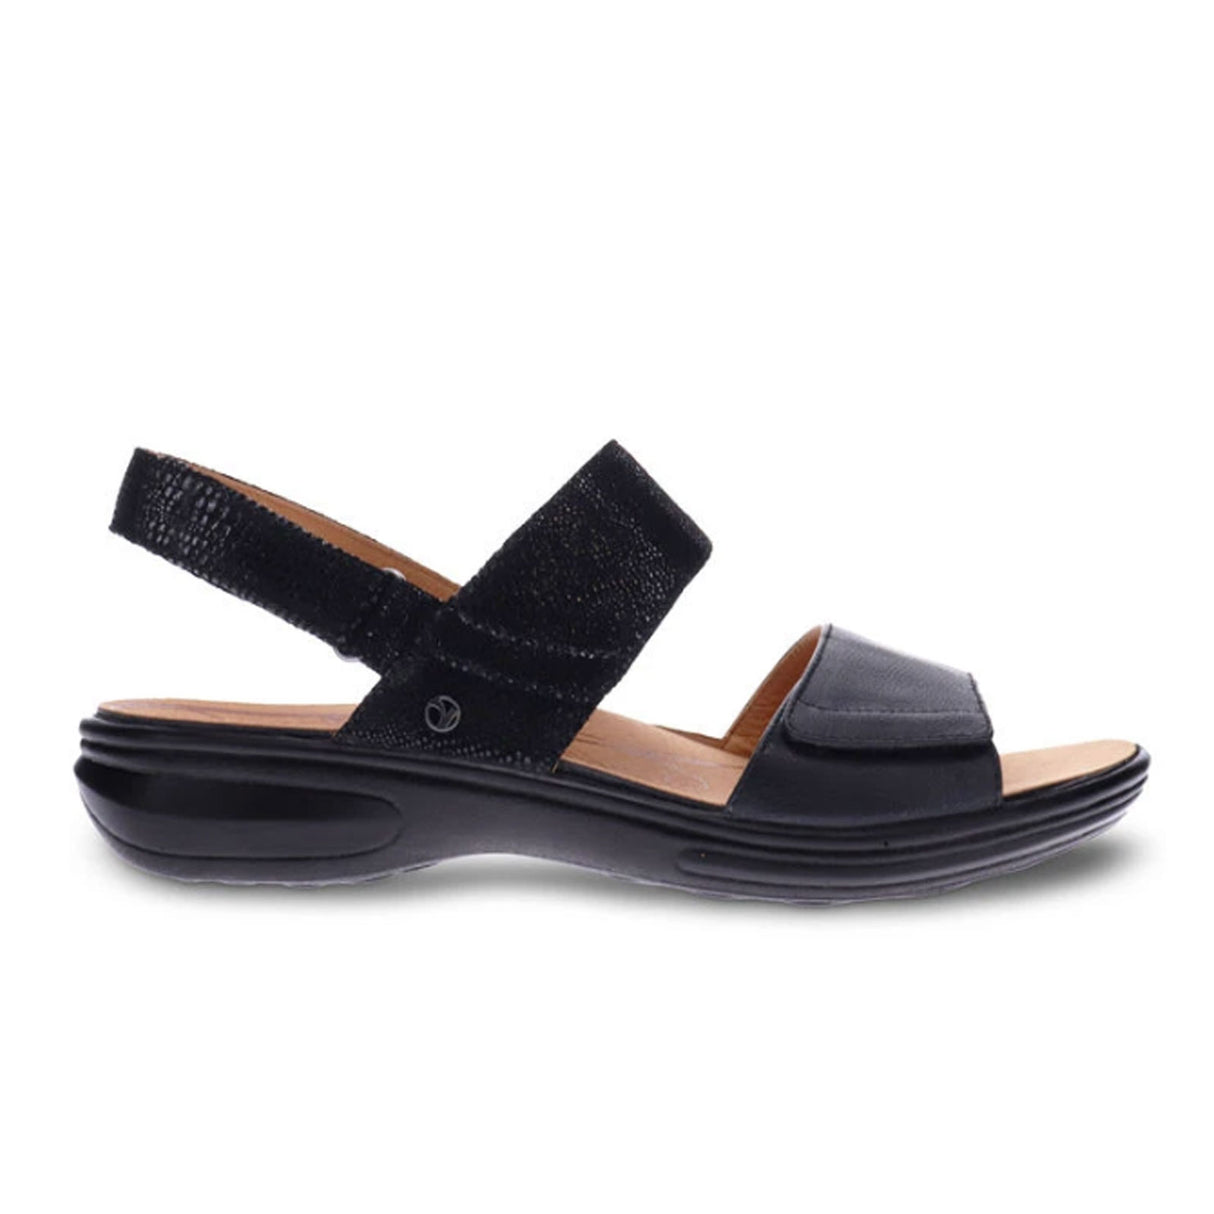 Revere Como Backstrap Sandal (Women) - Black/Black Lizard Sandals - Backstrap - The Heel Shoe Fitters